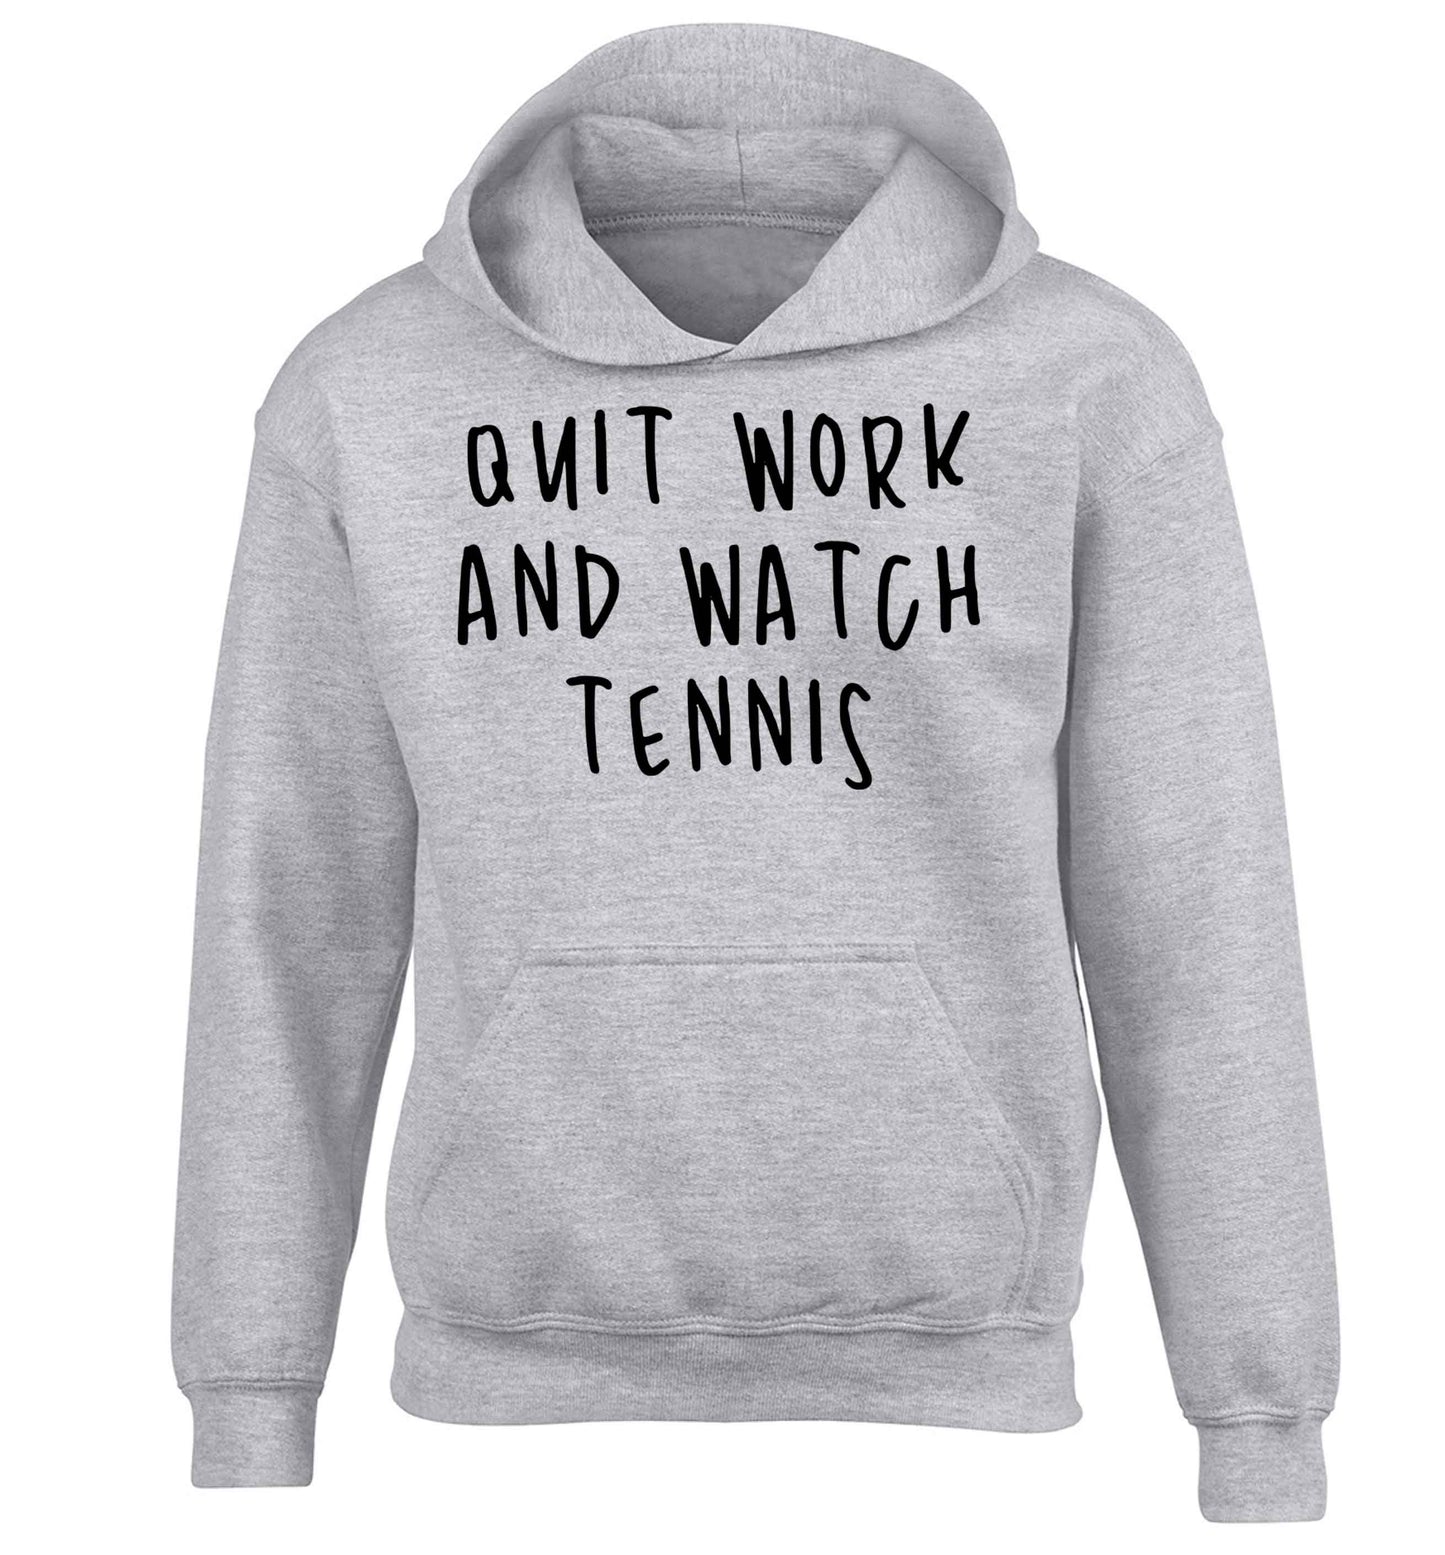 Quit work and watch tennis children's grey hoodie 12-13 Years